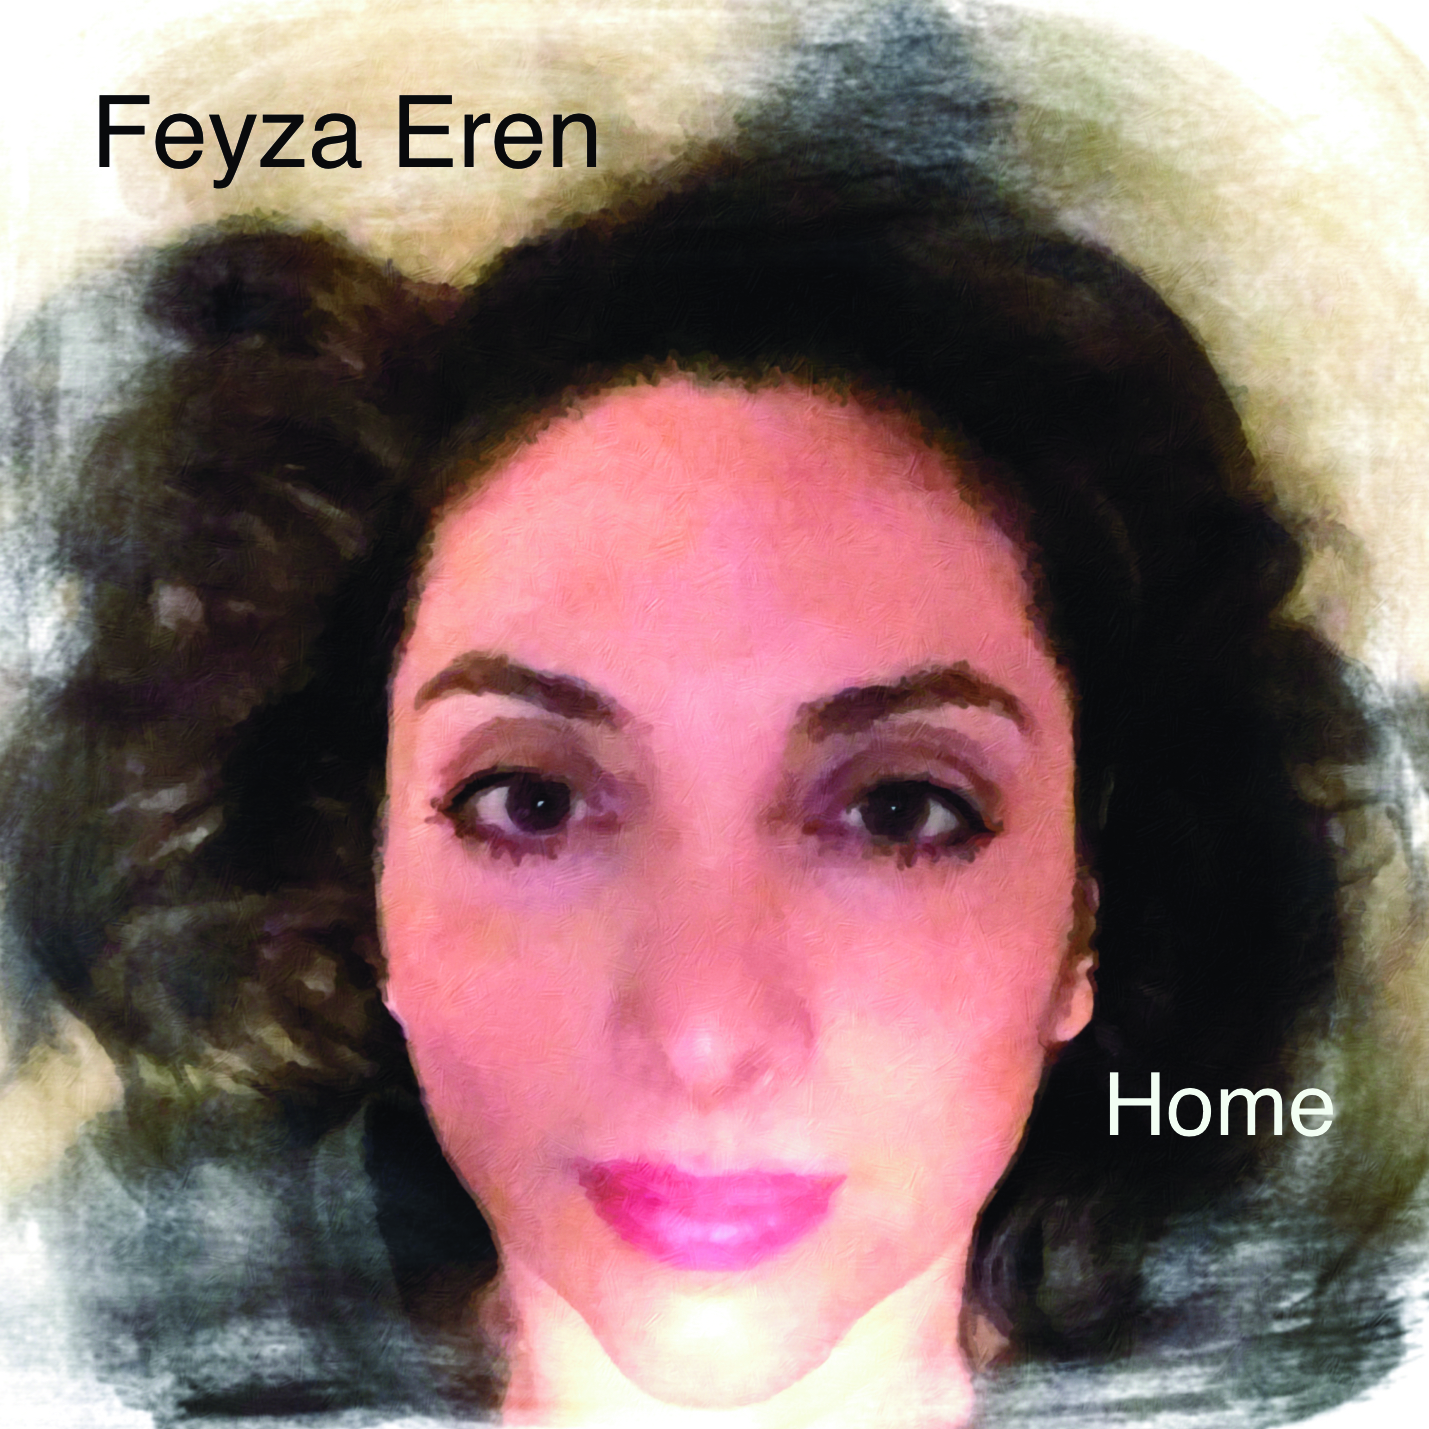 Feyza Eren Home